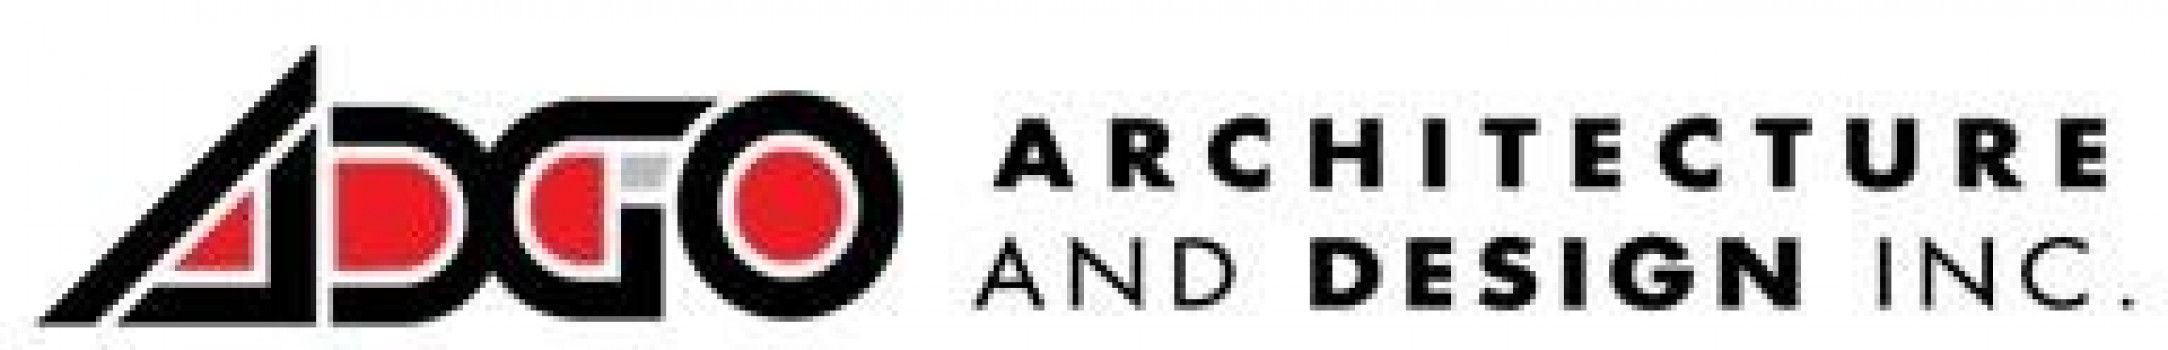 ADGO Architecture and Design, Inc. (Daniel C. Go and Associates)